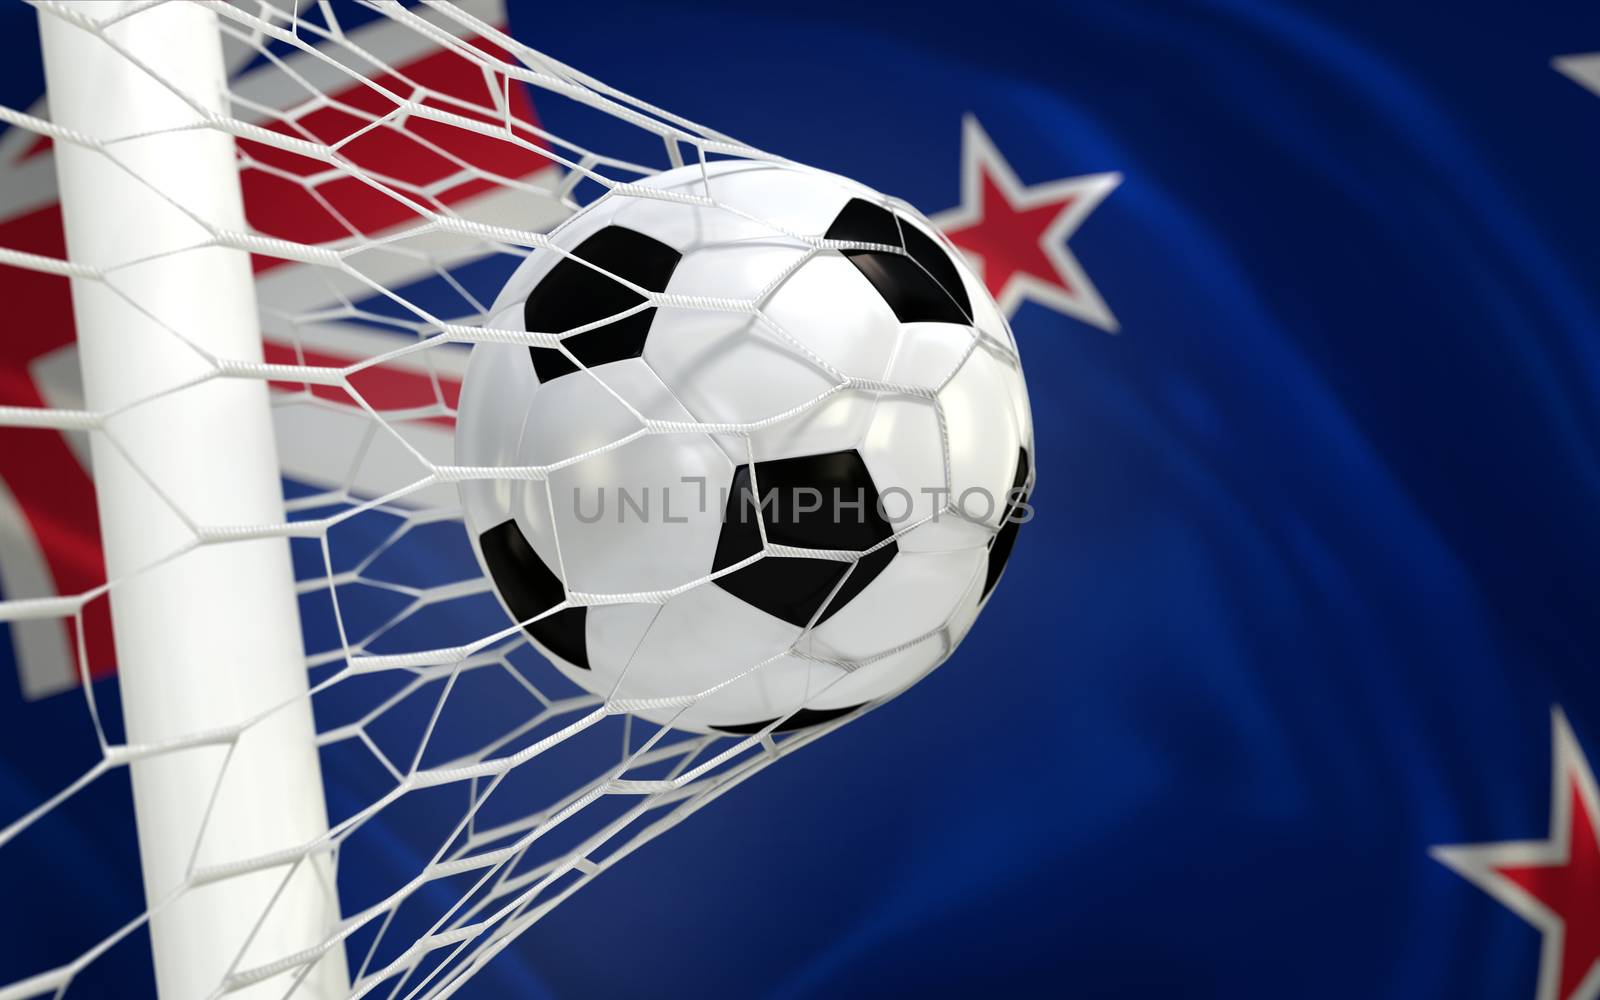 New Zealand flag and soccer ball, football in goal net